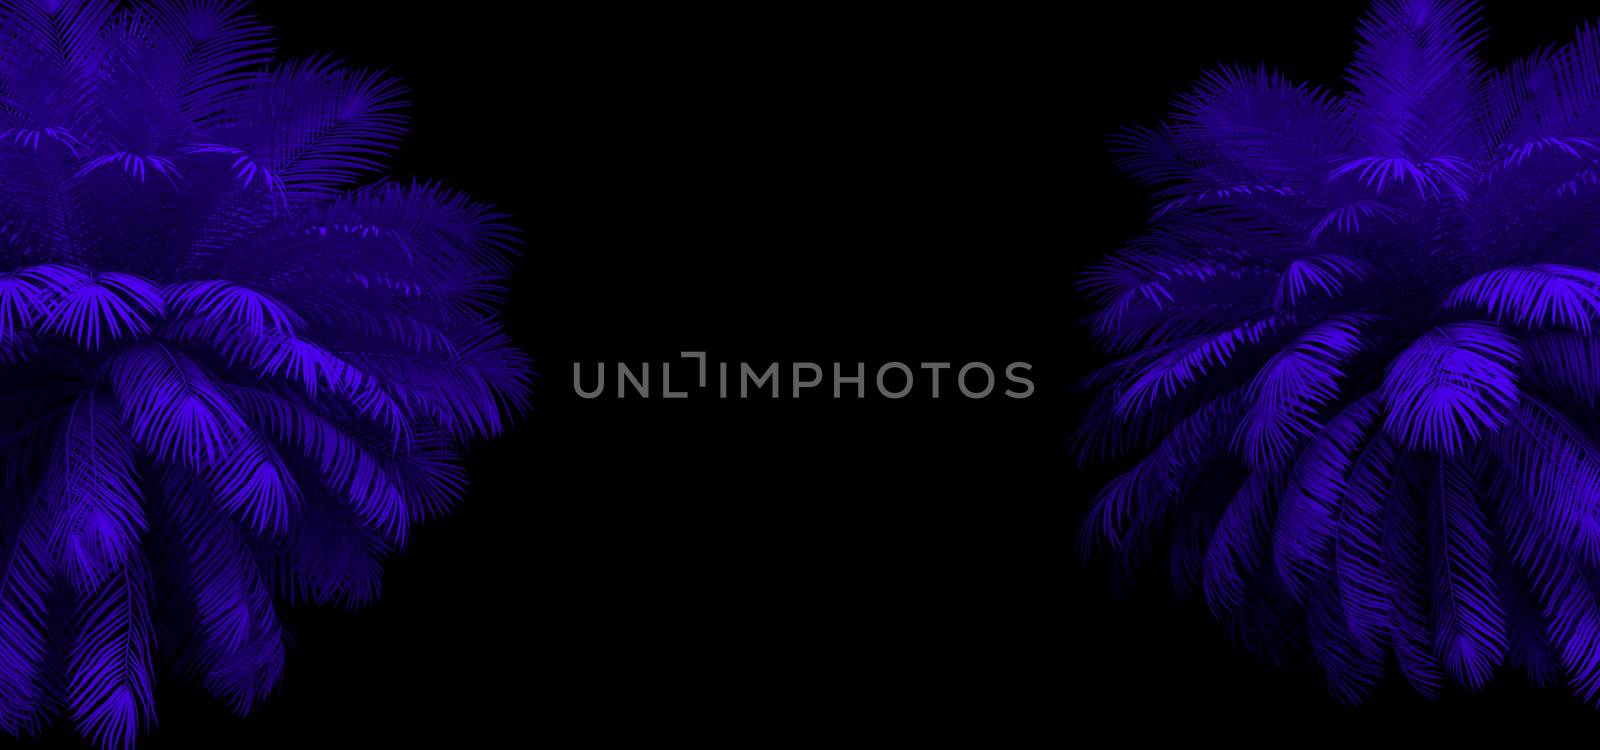 3d render of neon palm leaves on the black. Banner design. Retrowave, synthwave, vaporwave illustration. Party and sales concept